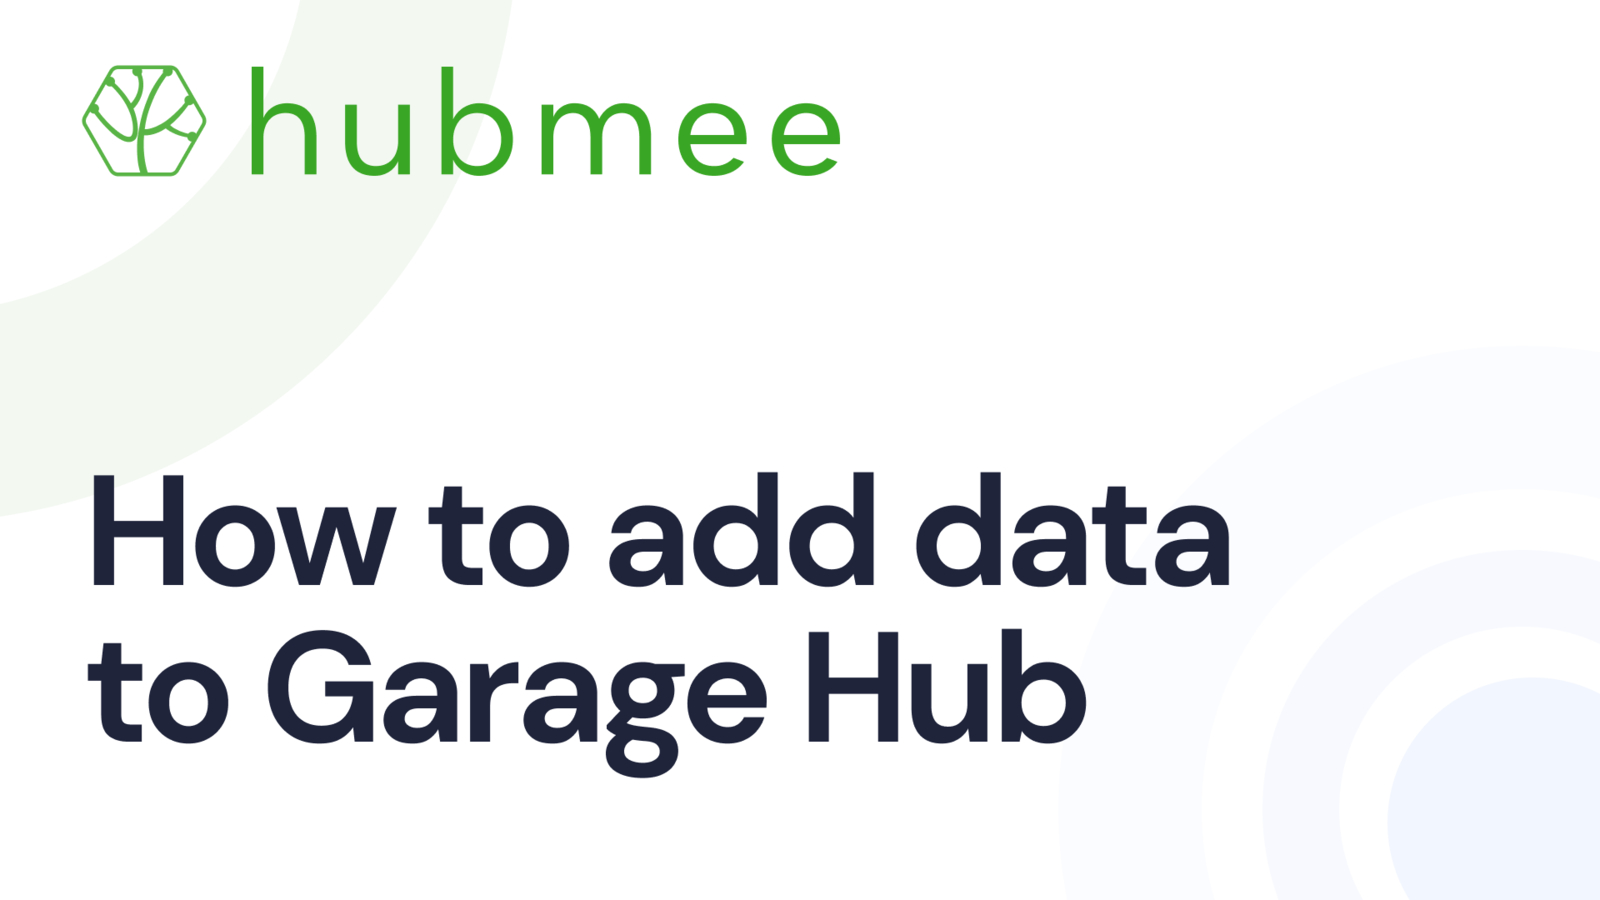 How to add data to Hubmee’s Garage Hub